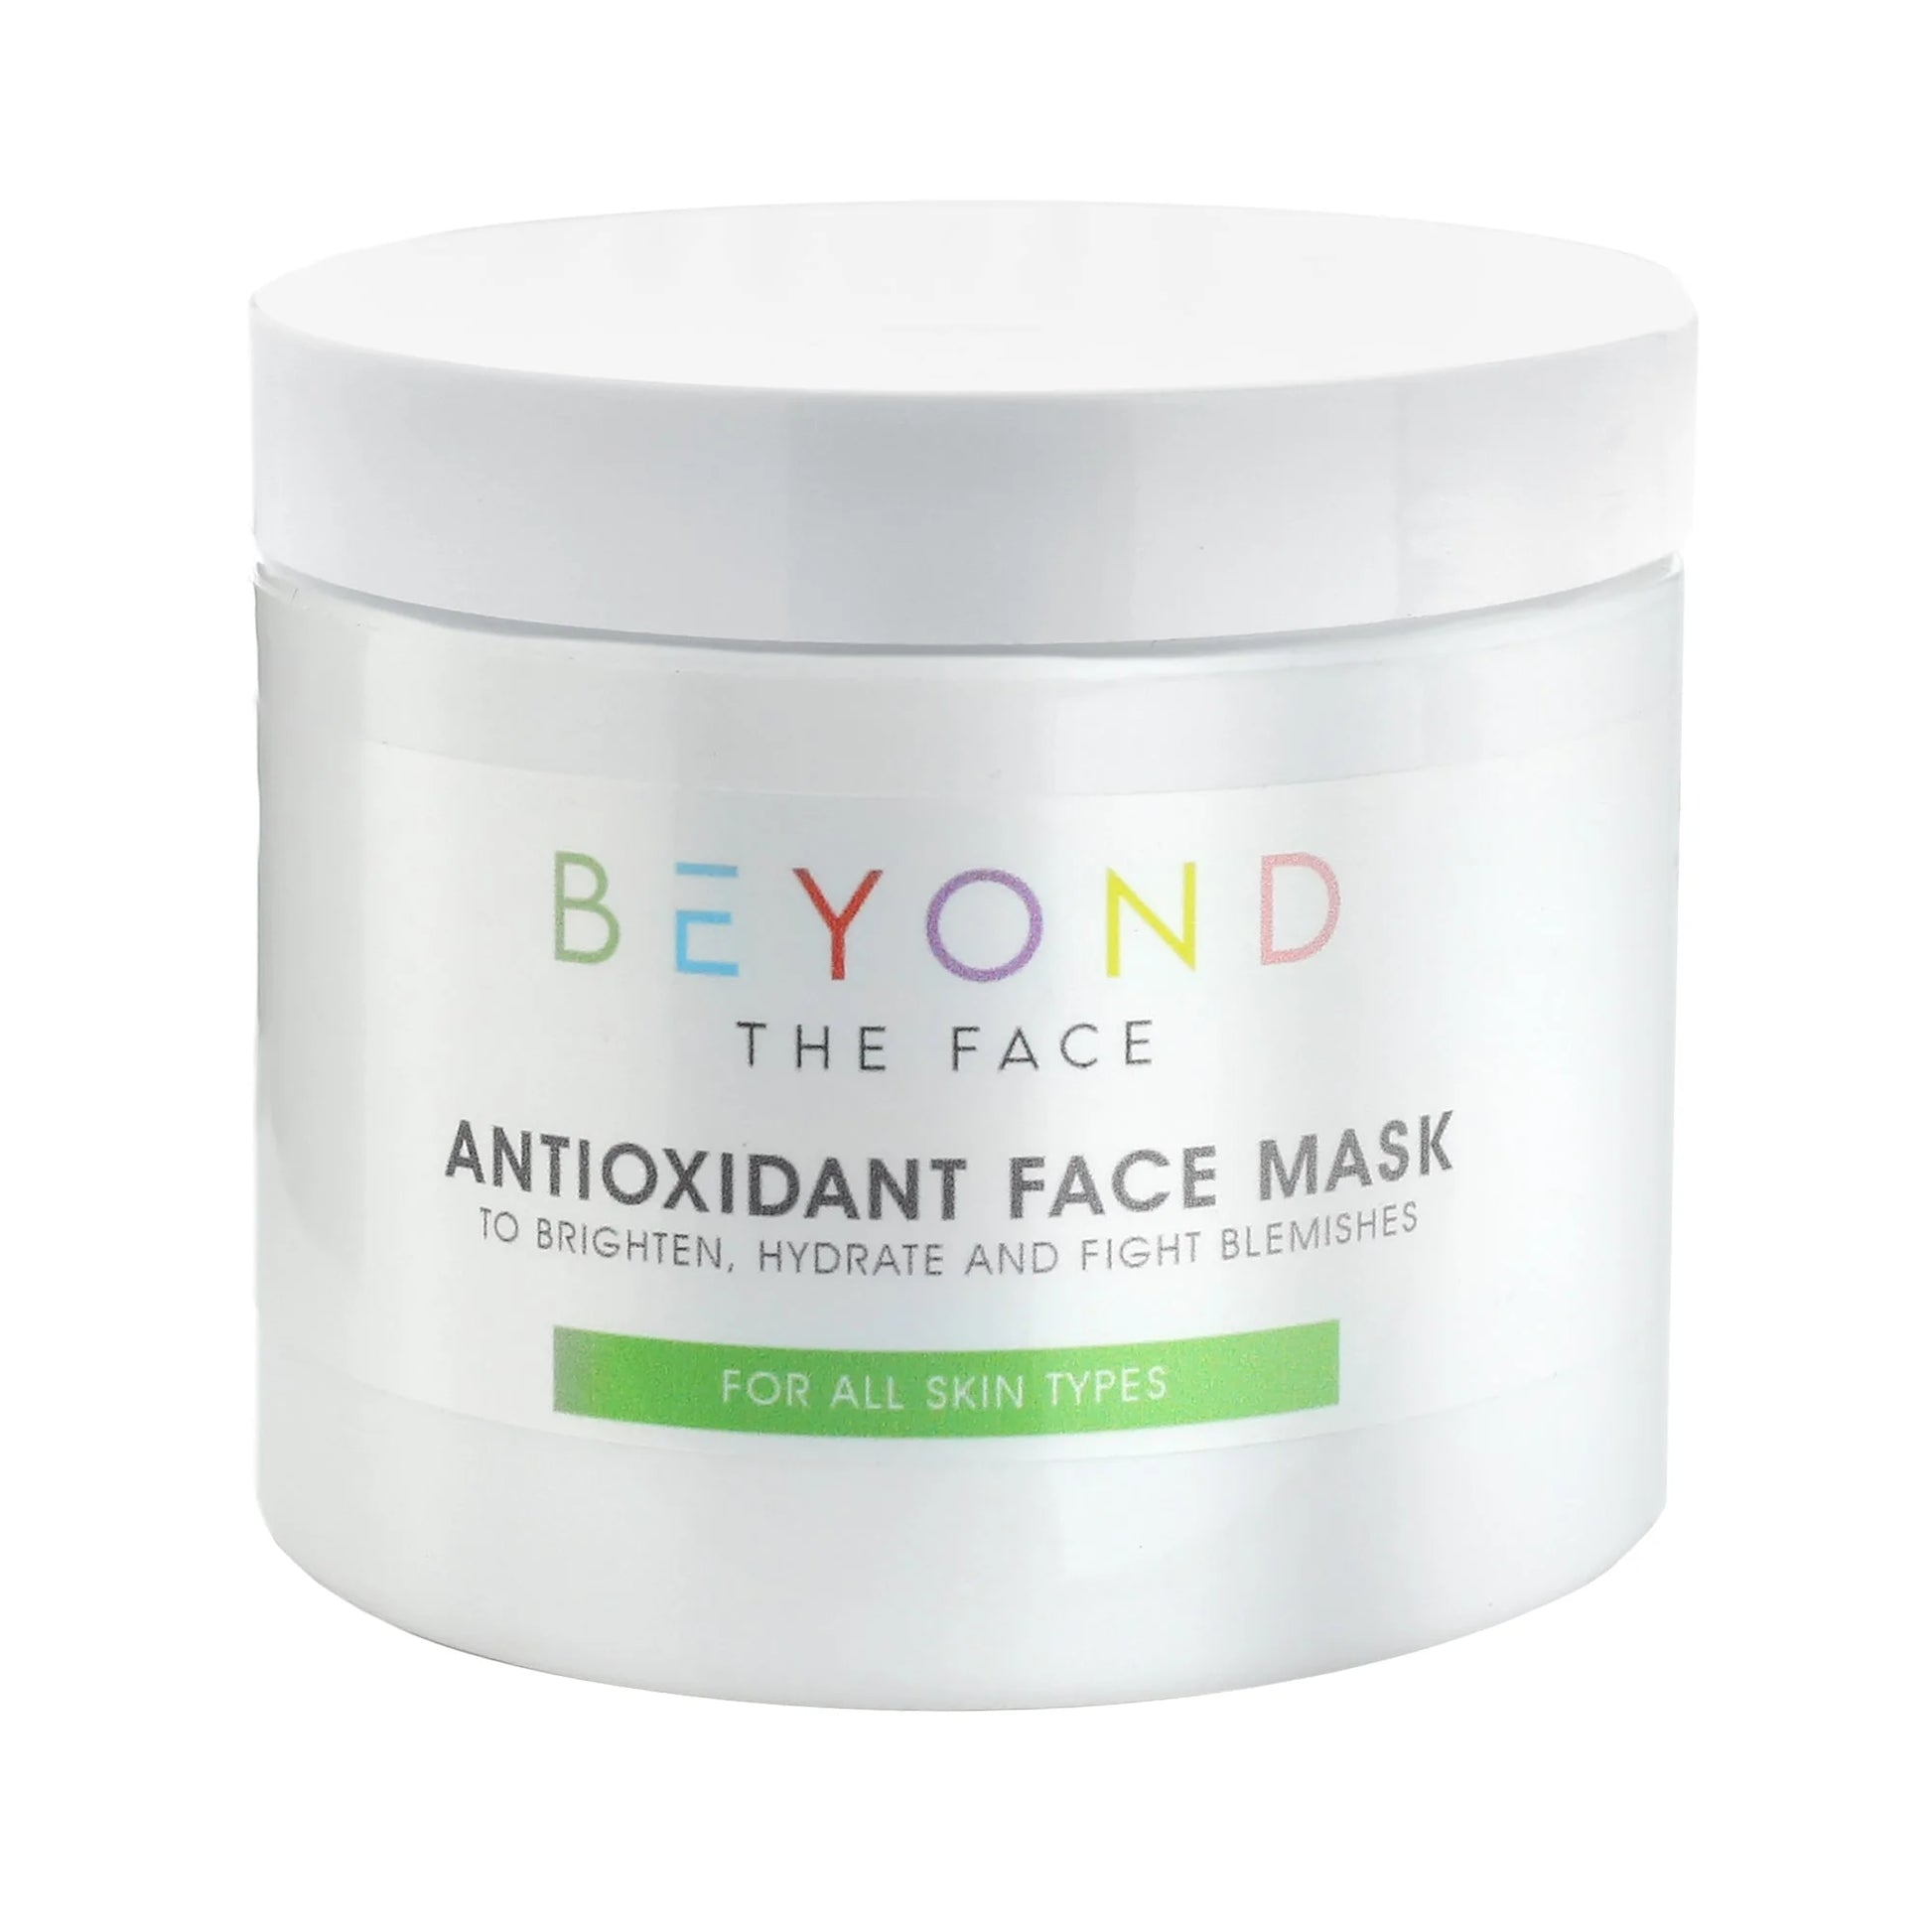 Antioxidant Face Mask